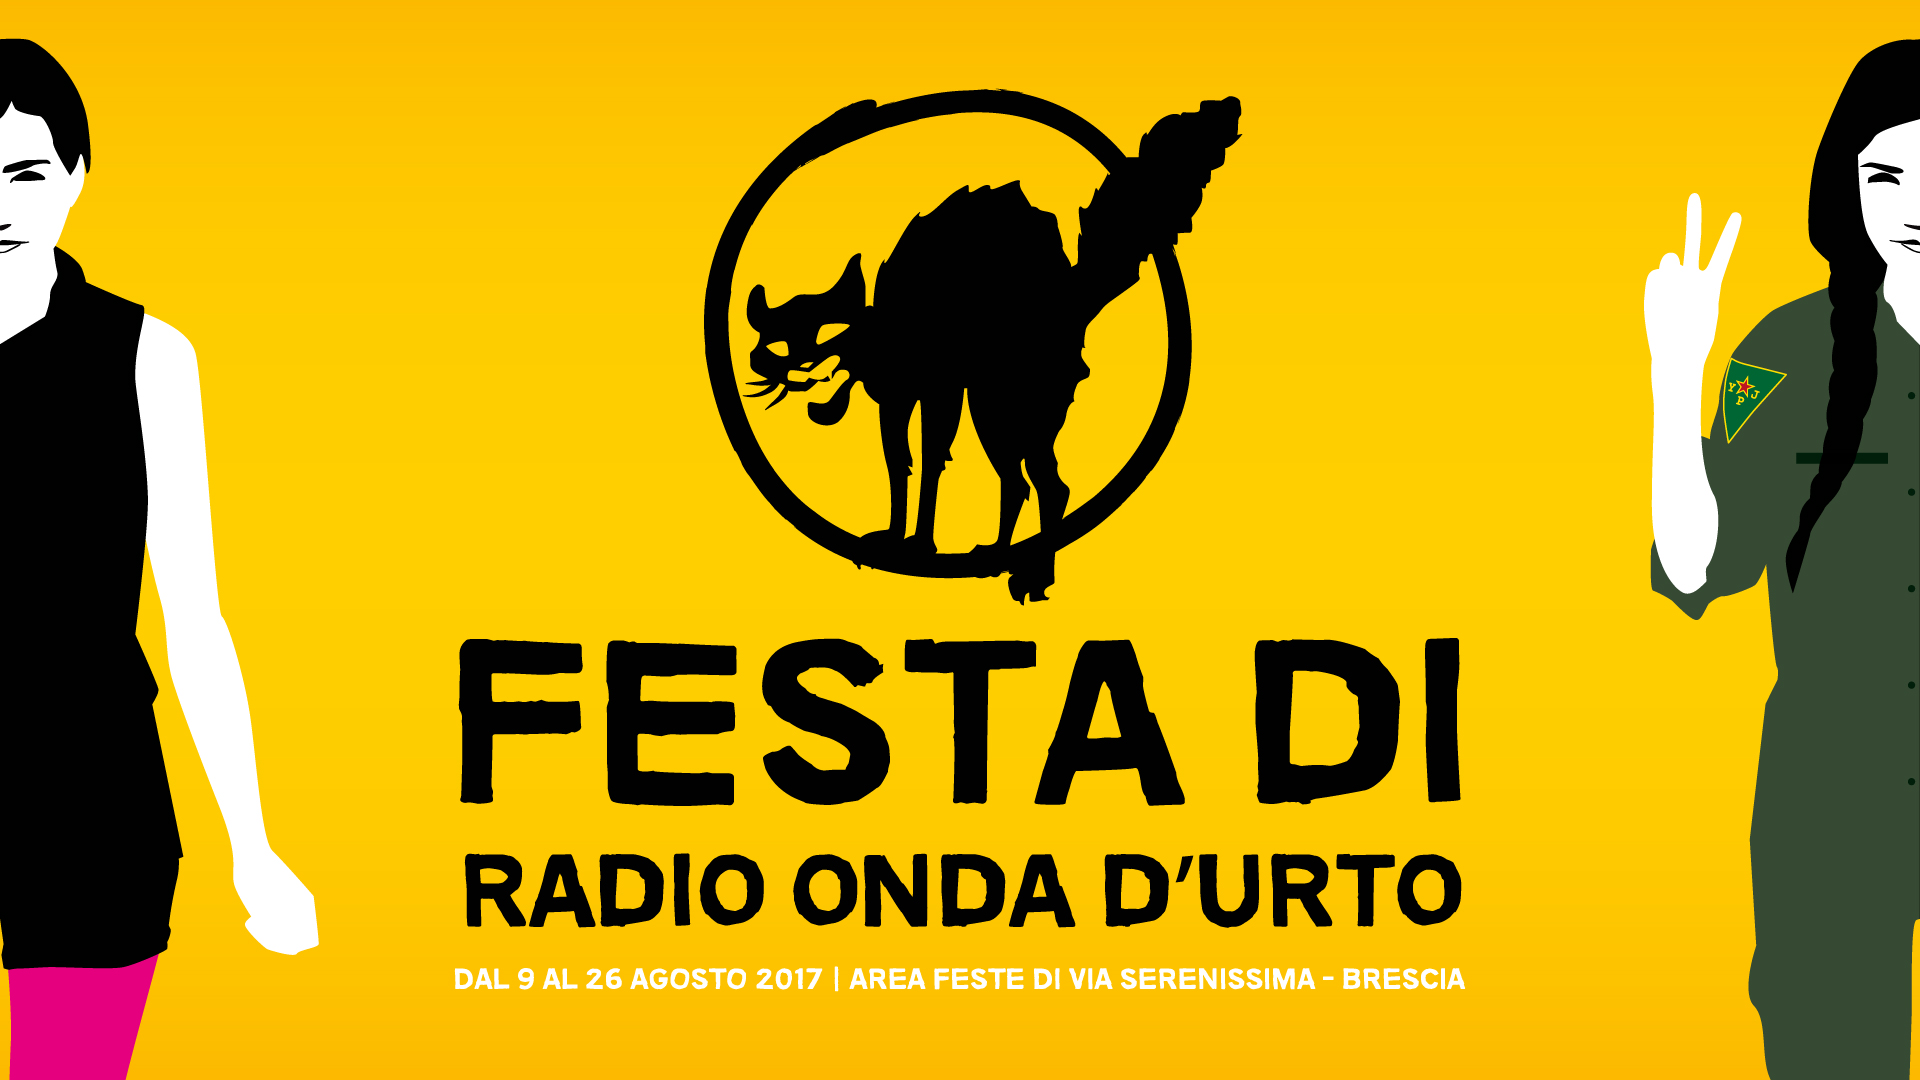 Live @ Festa Radio Onda d’Urto 2017 – 13 agosto